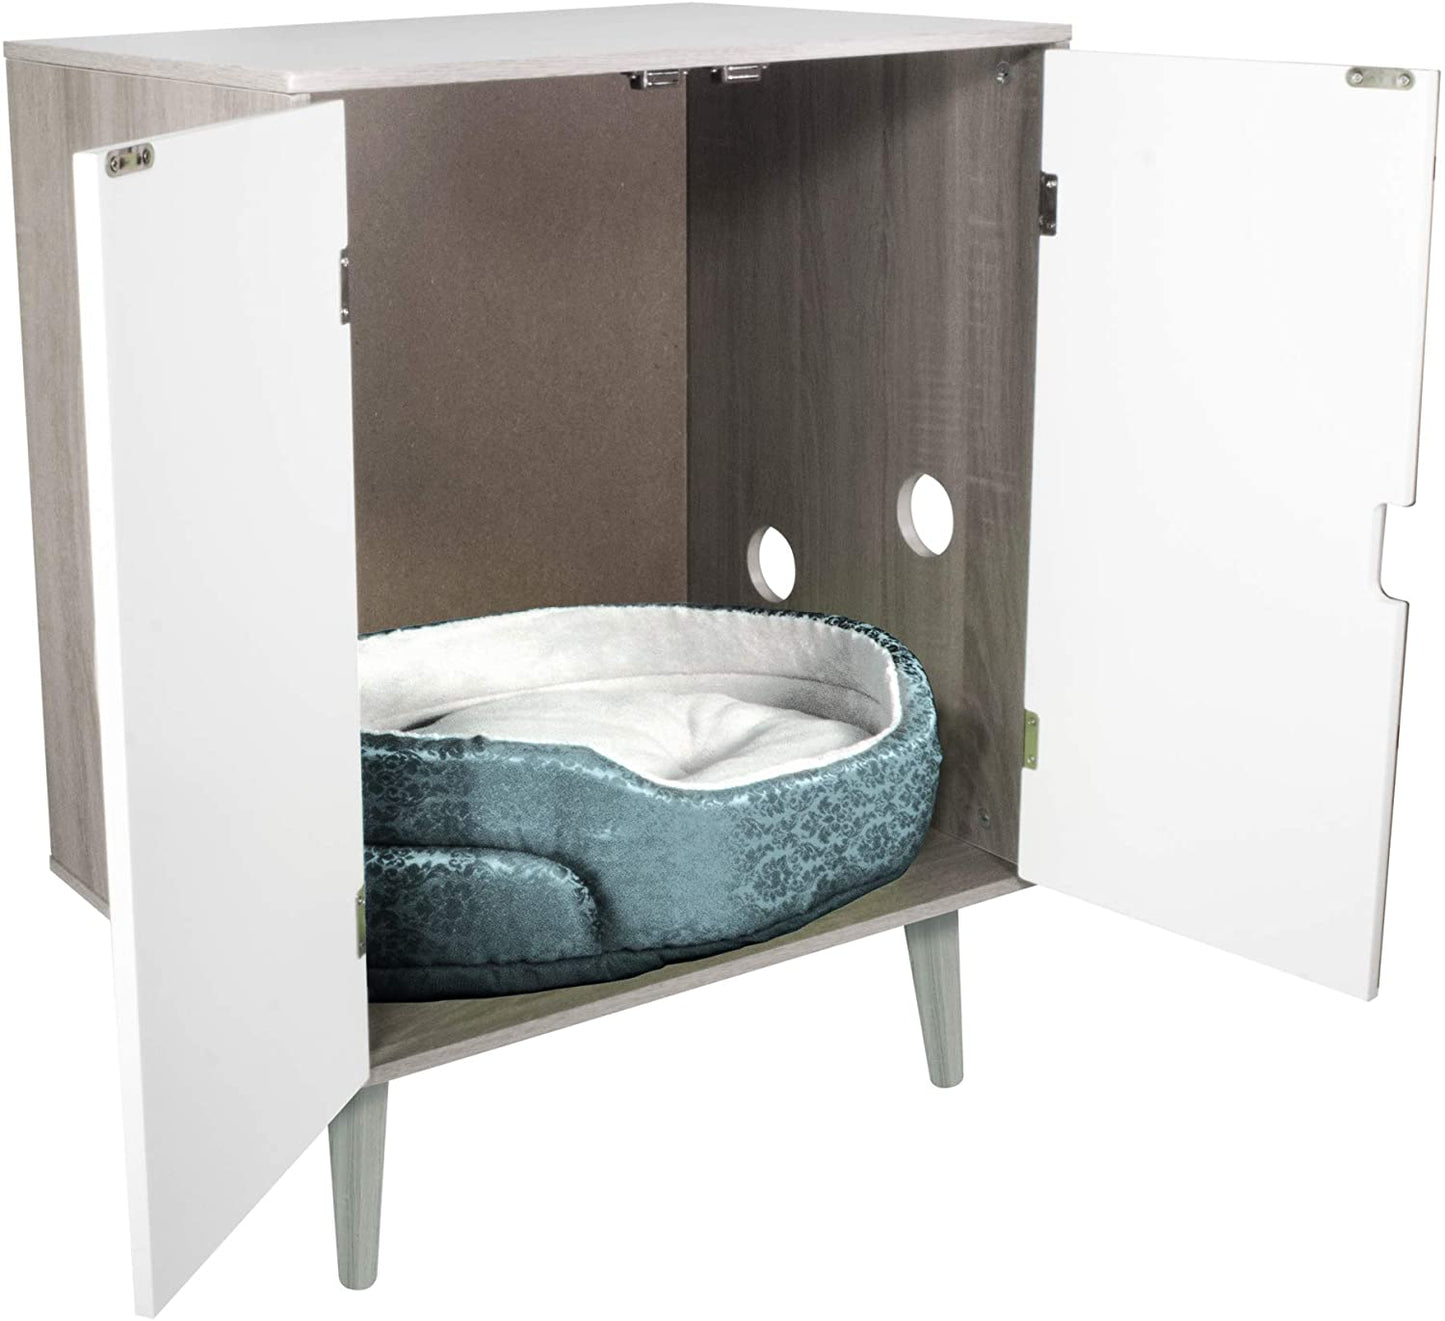 Penn-Plax Cat Walk Furniture: Contemporary Home Cat Litter Hide-Away Cabinet – Grey Wood Grain with White Doors